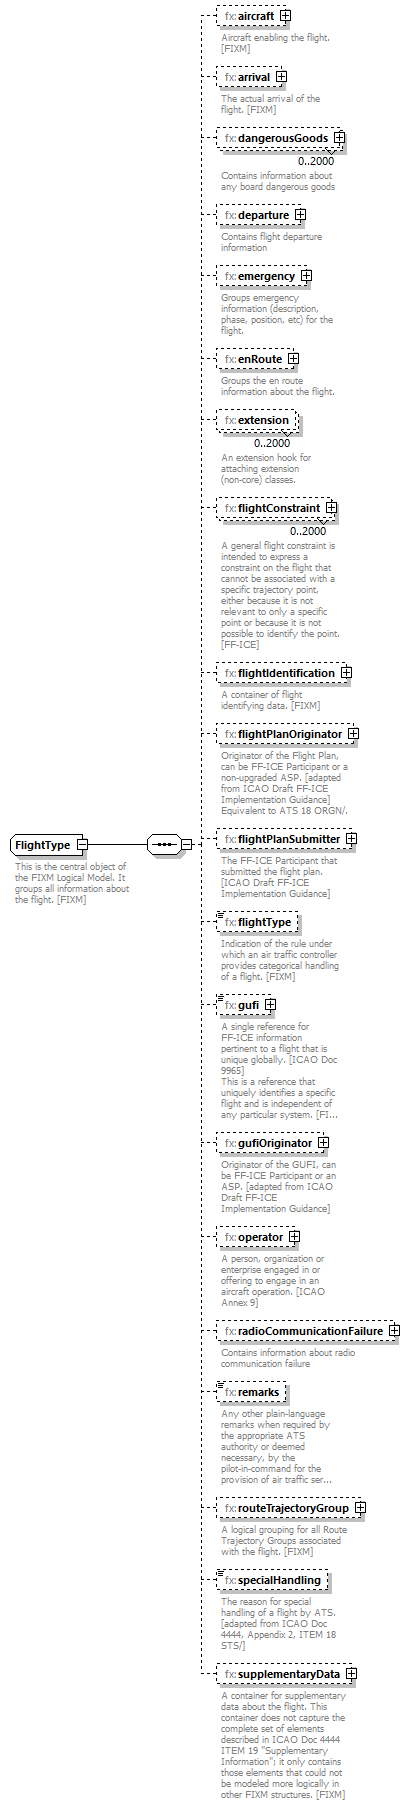 BasicMessage_diagrams/BasicMessage_p337.png